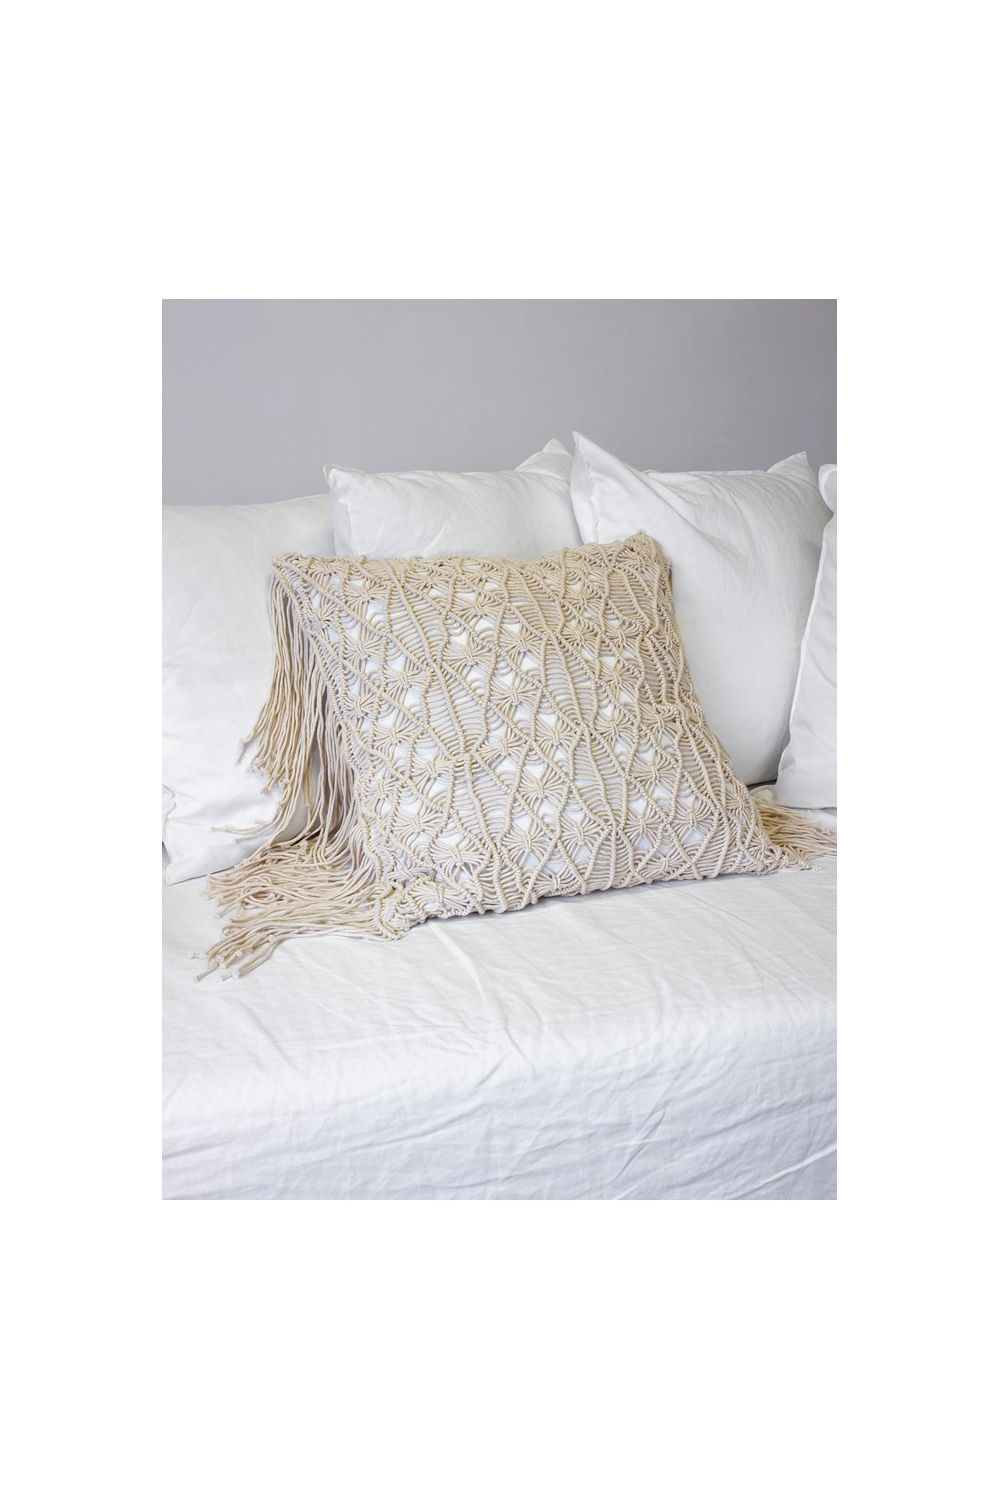 Nest knot cushion, $99